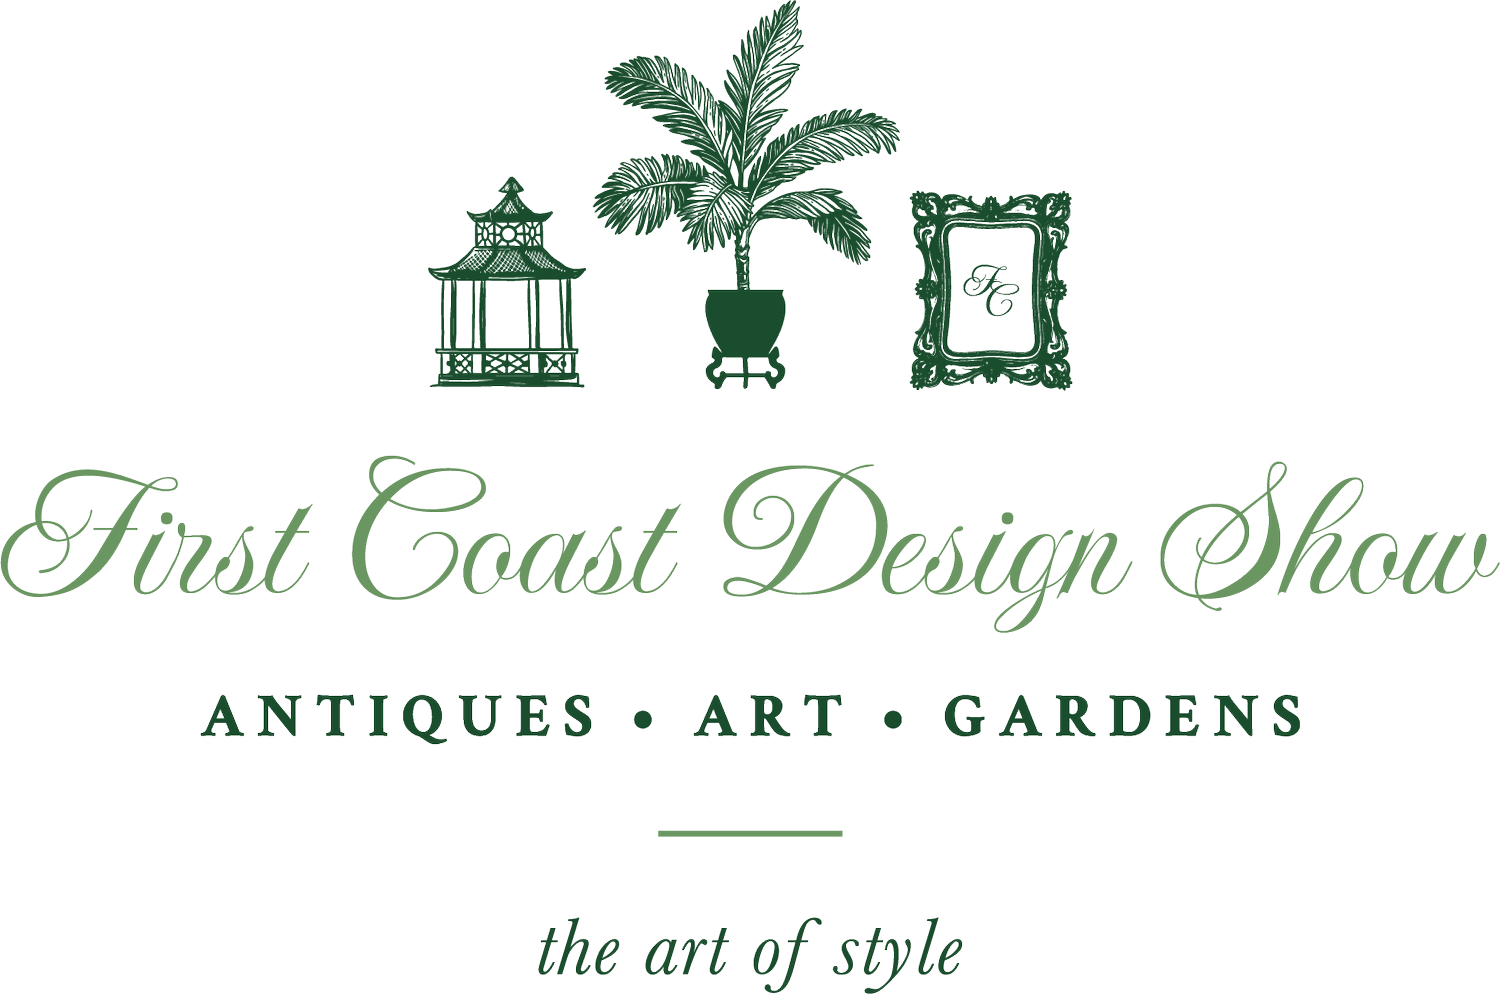 First Coast Design Show